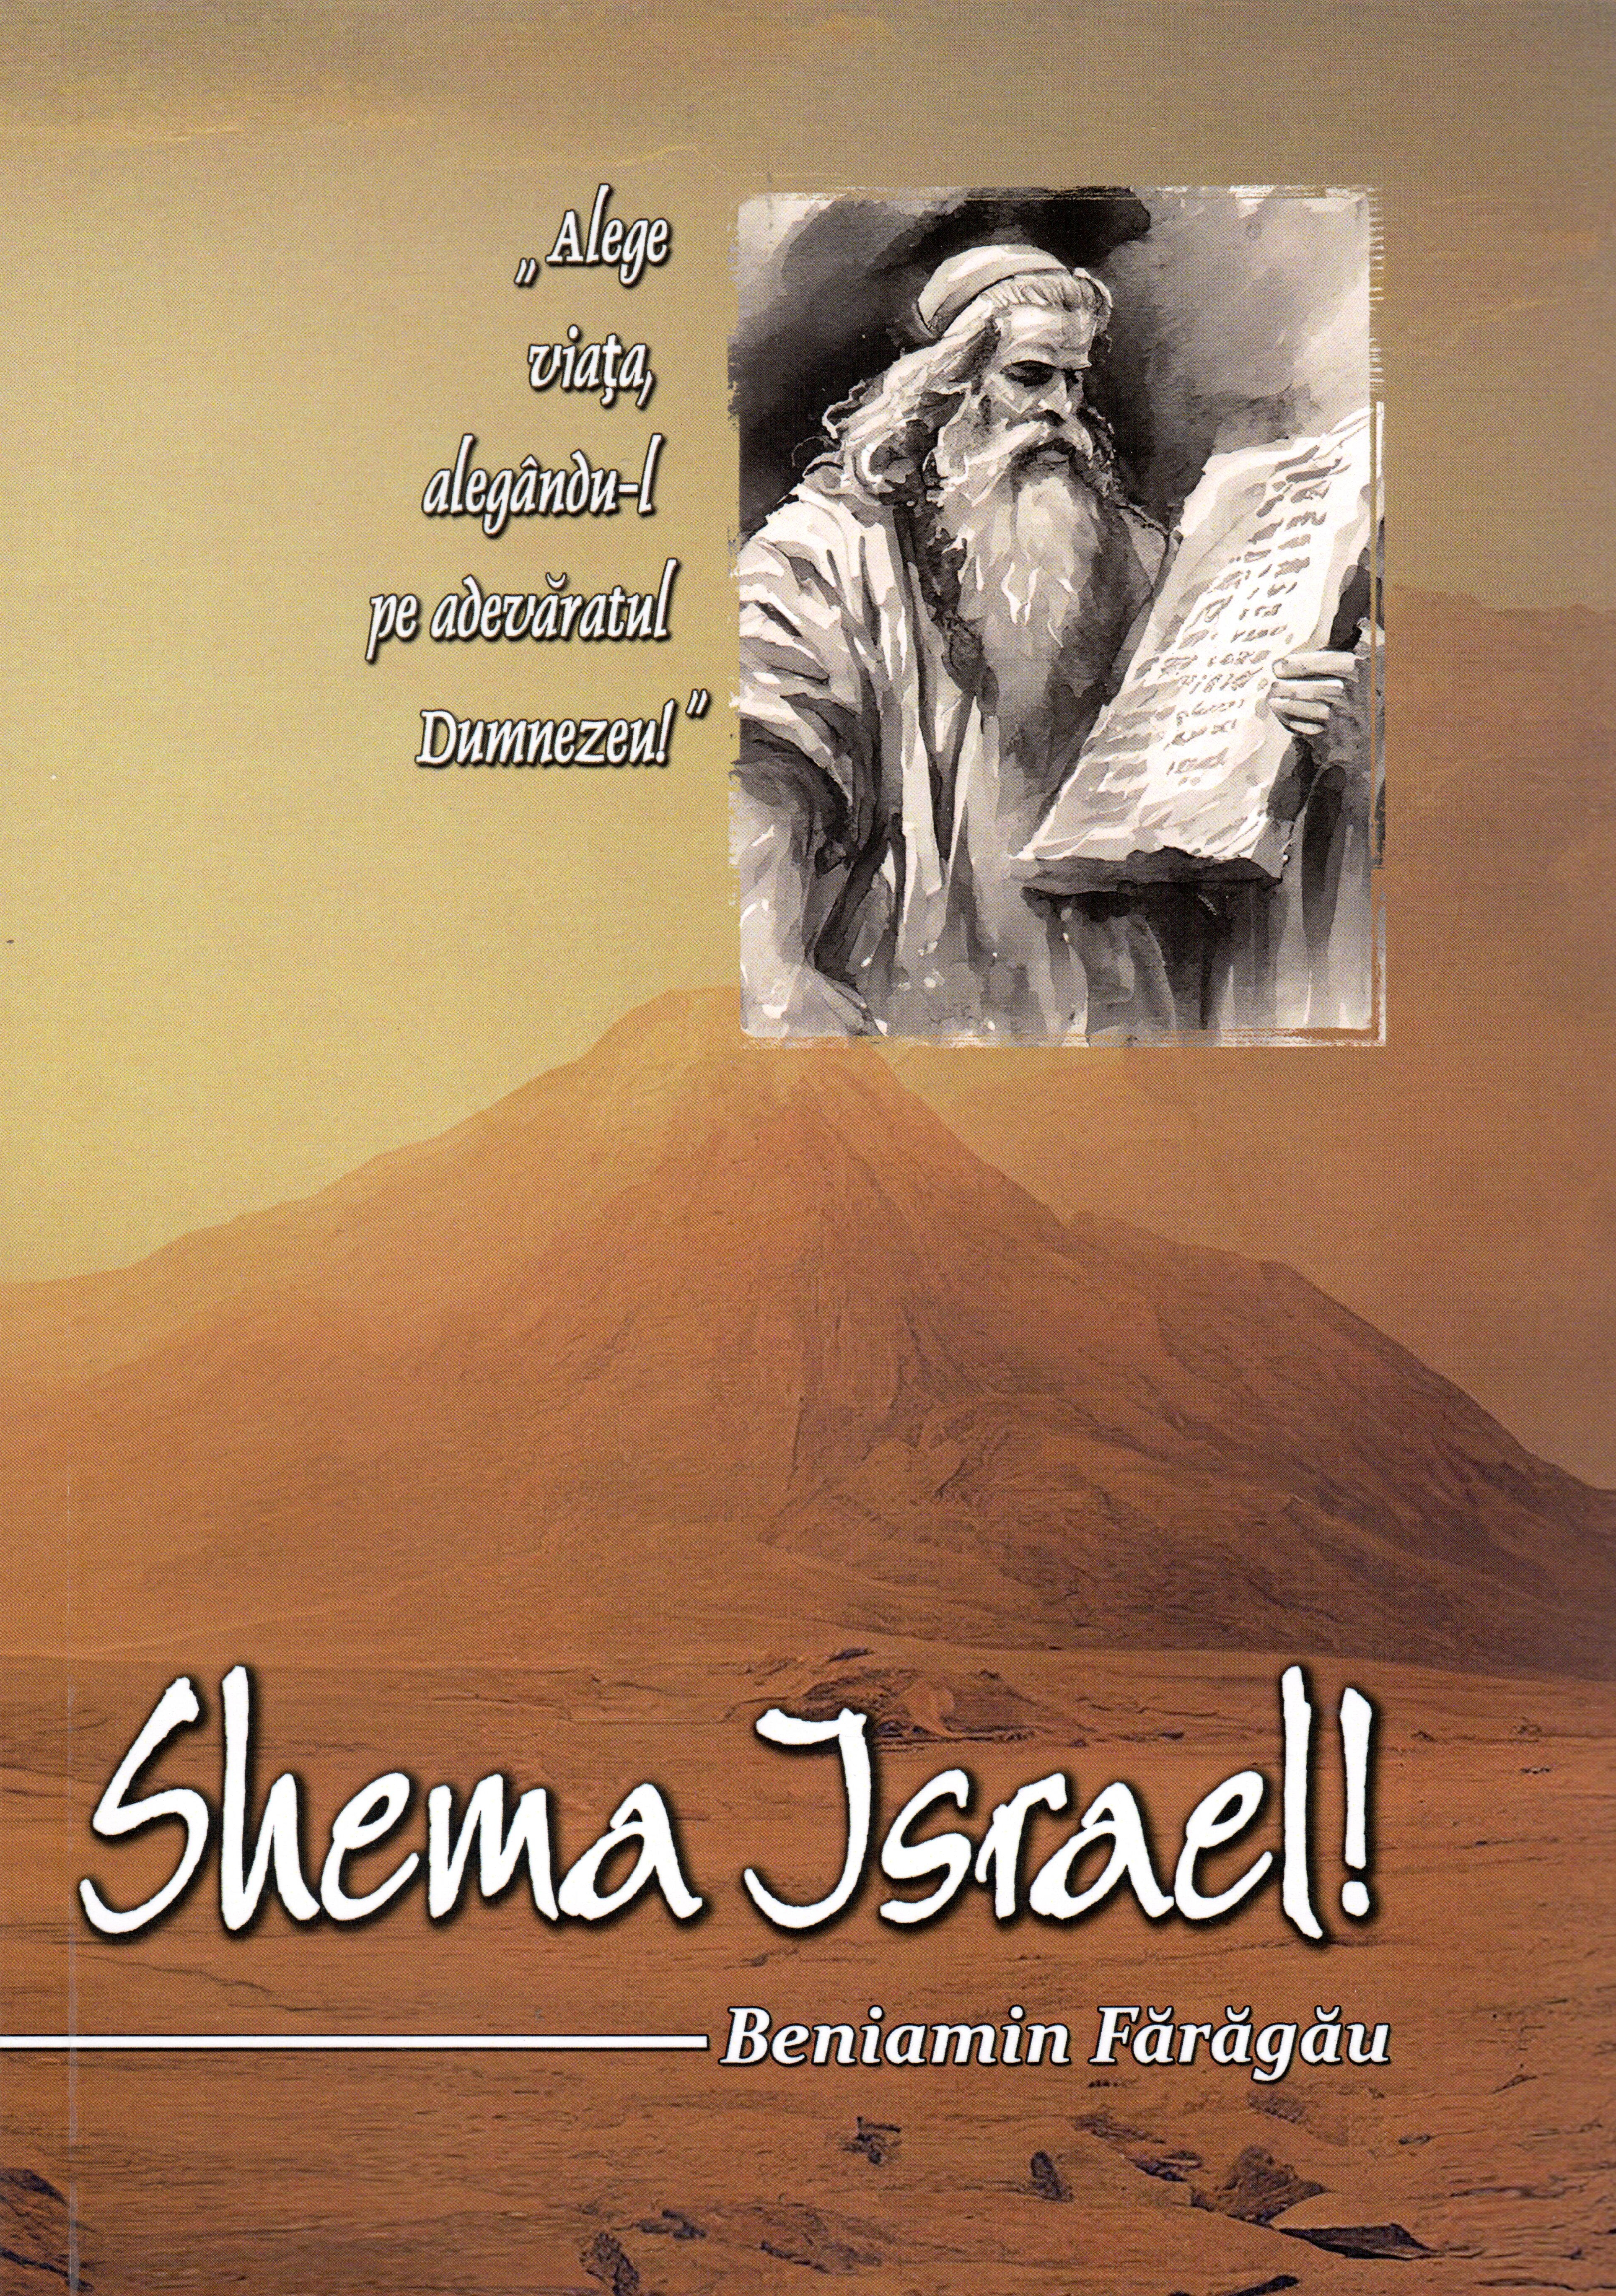 Shema Israel!